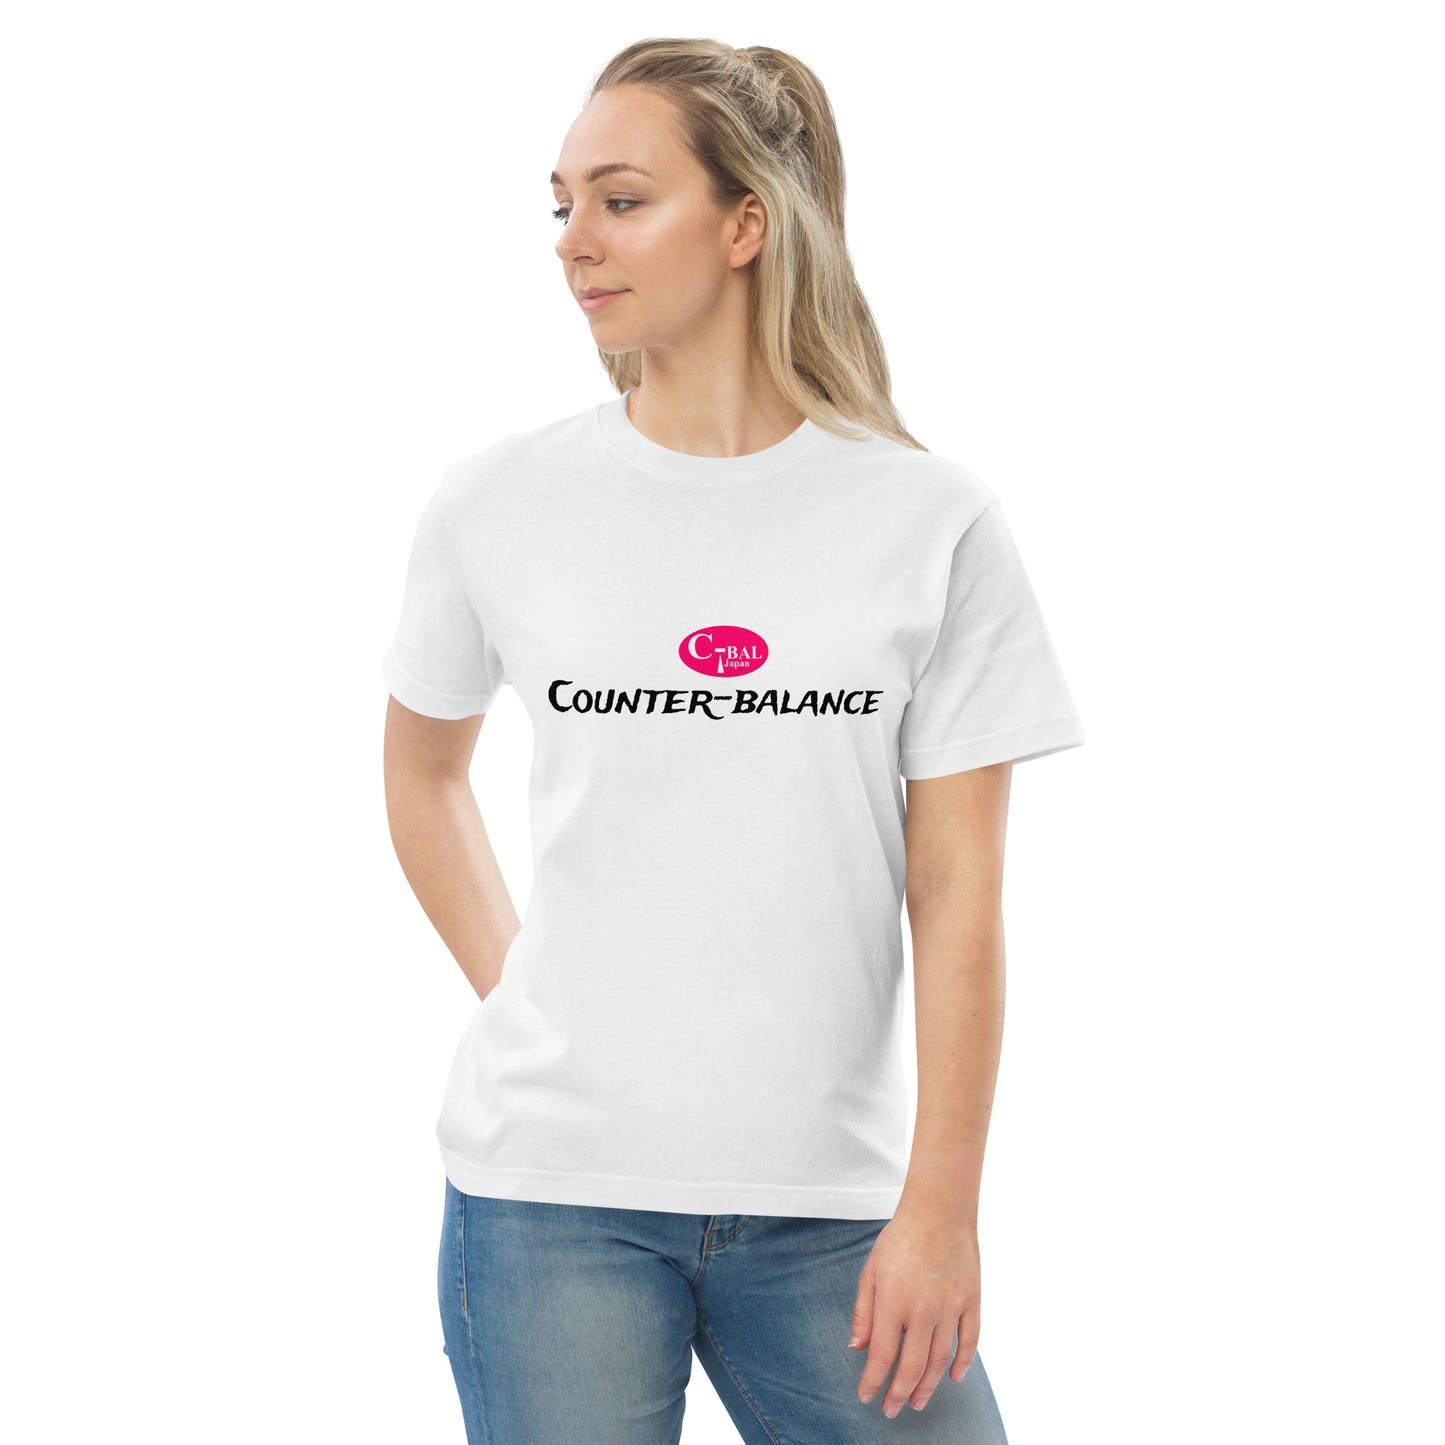 A006 - High Quality Cotton T-shirt (C-BAL : White / Pink)